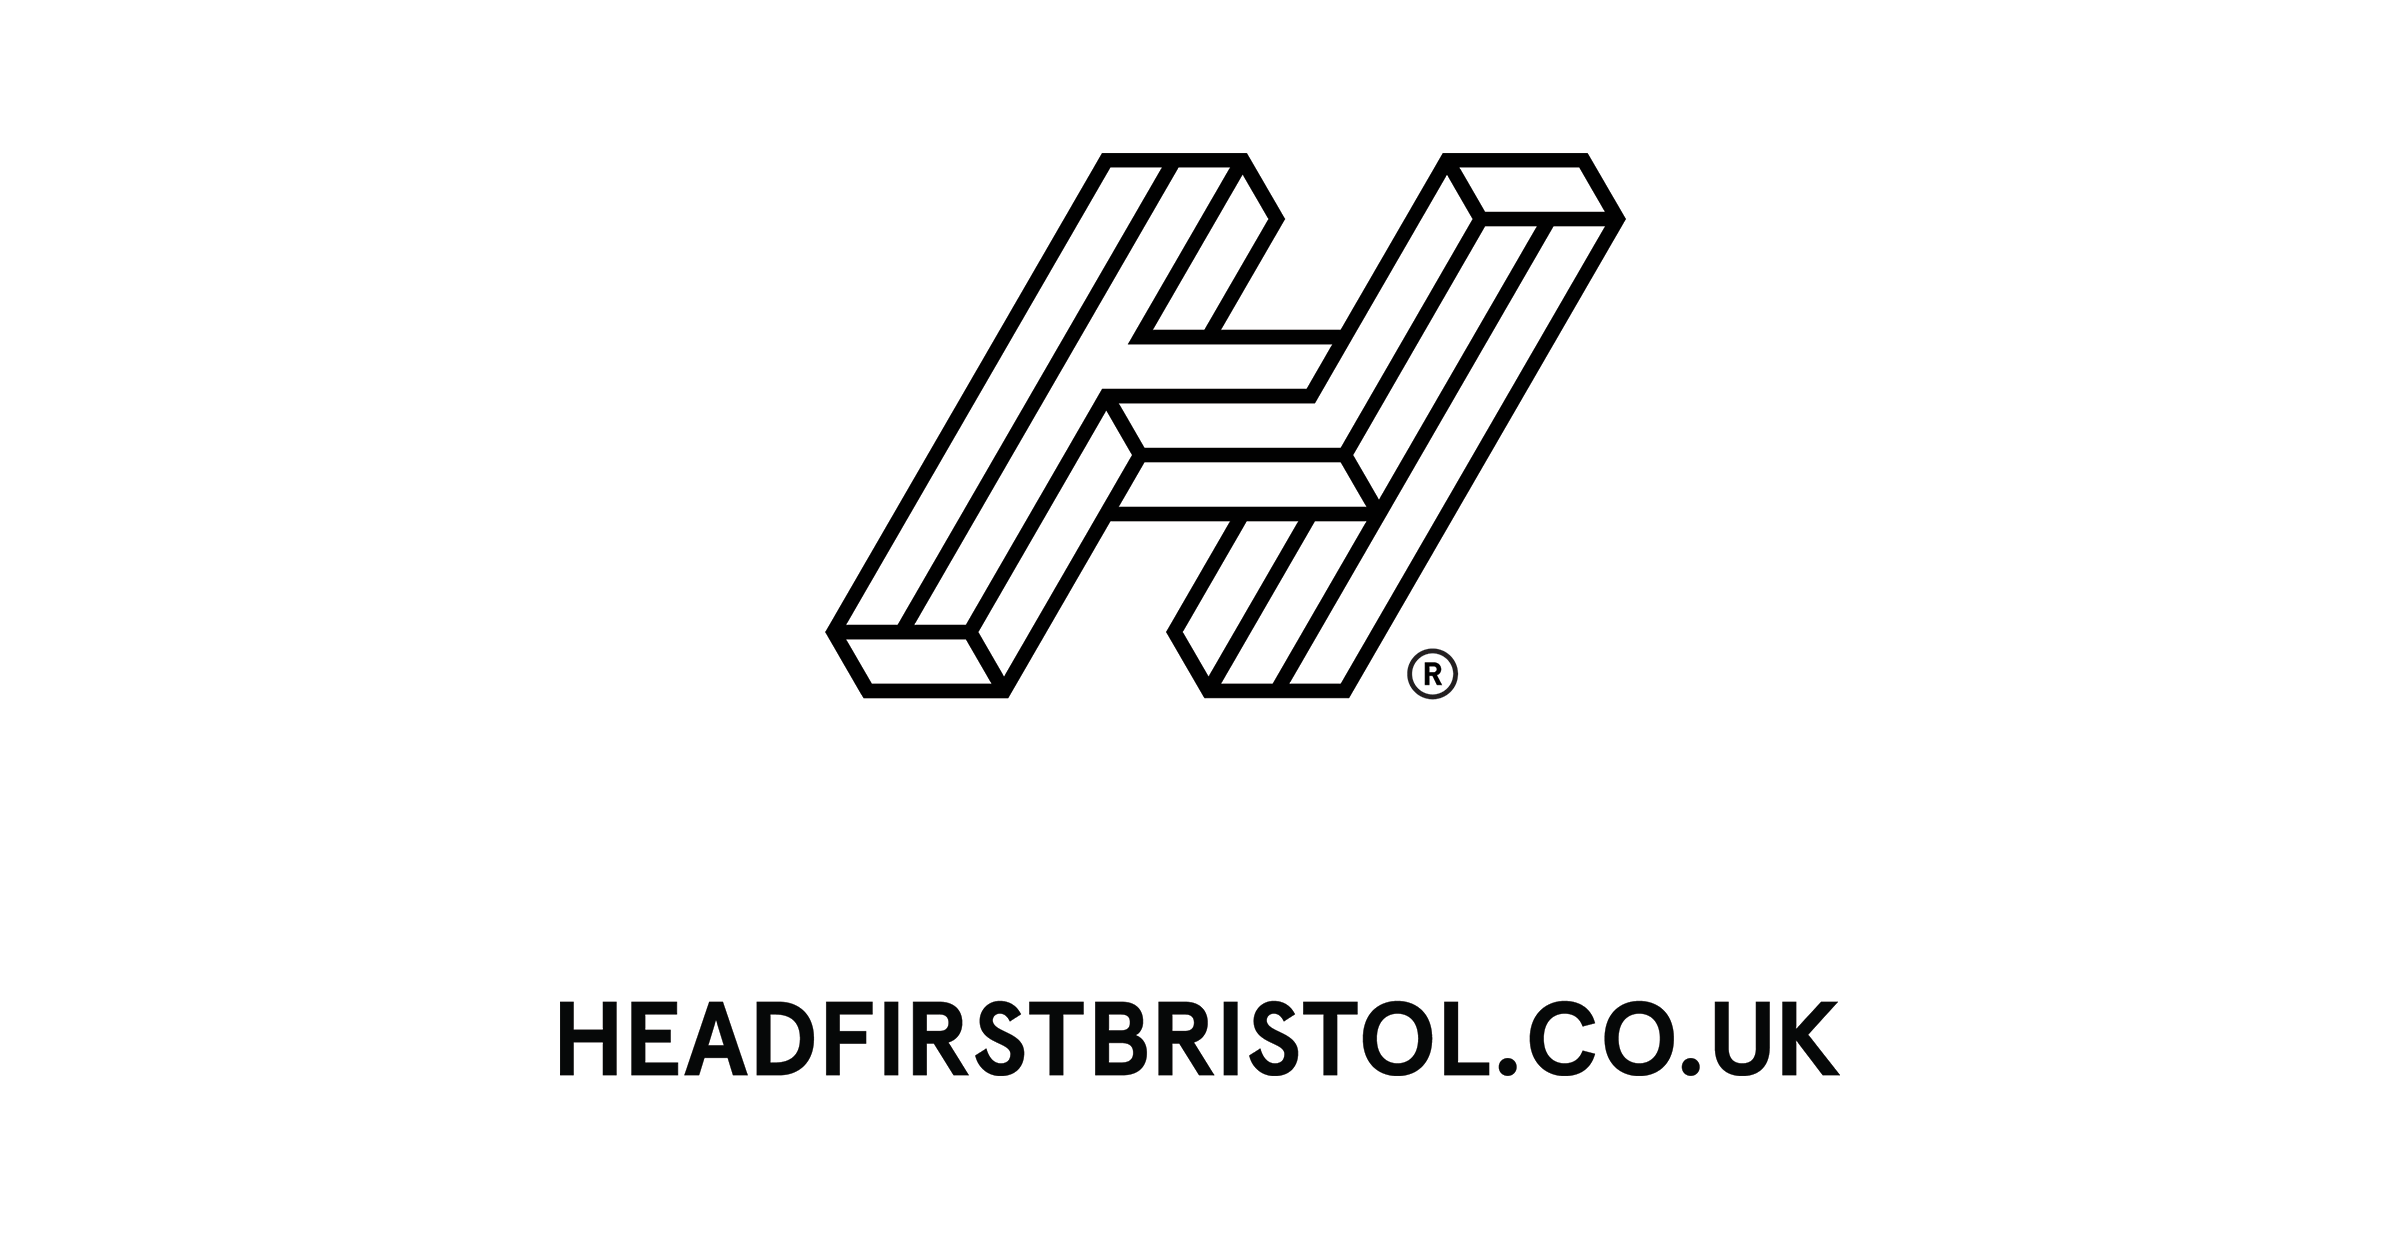 www.headfirstbristol.co.uk